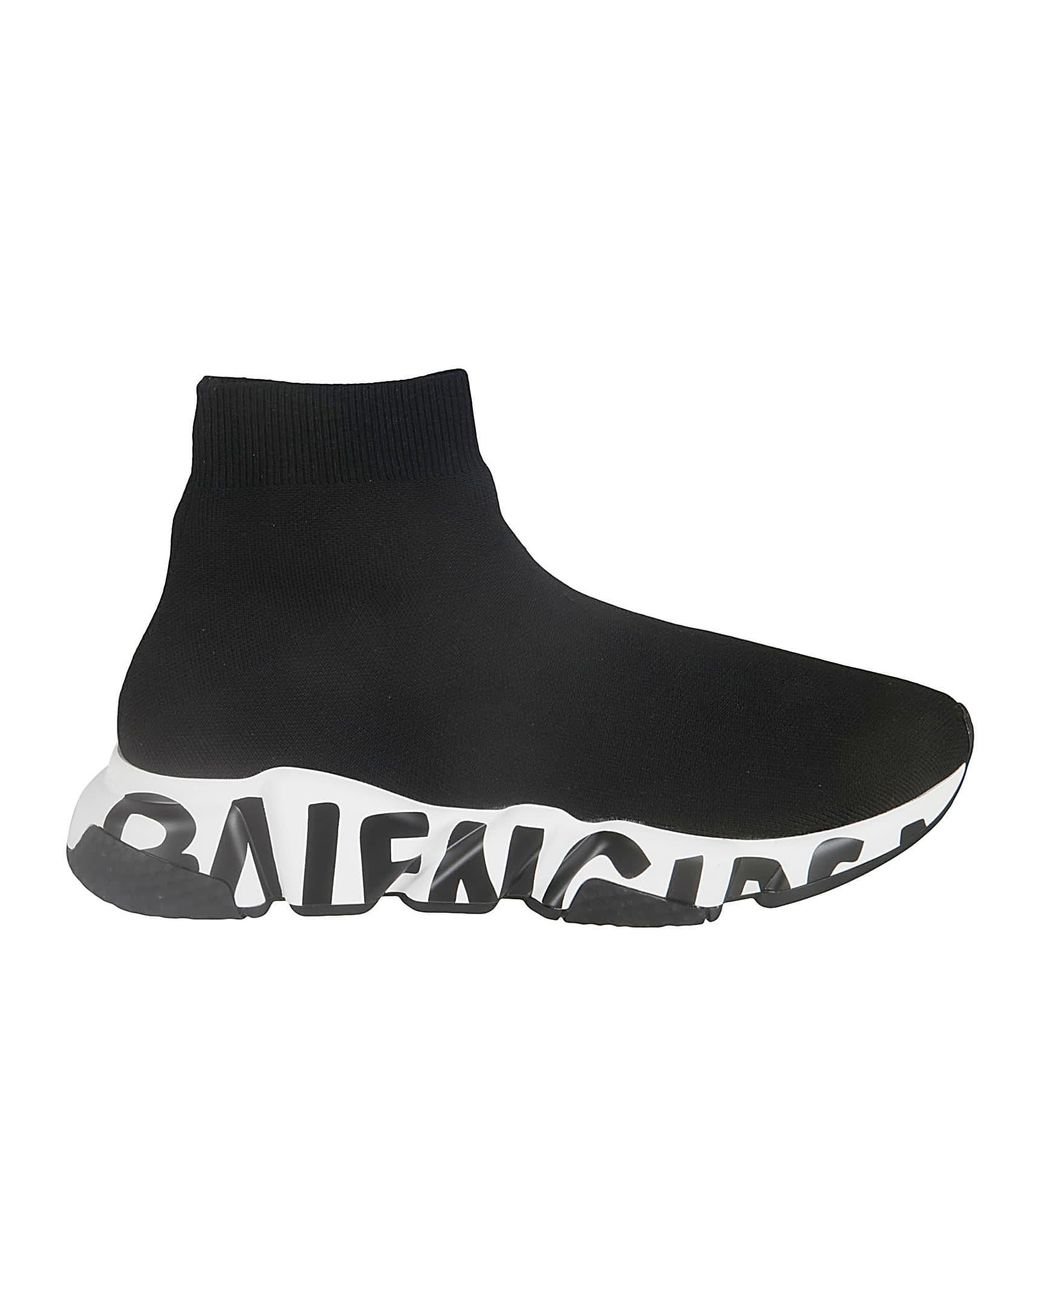 Balenciaga Speed Lt Graffiti Sneakers in Black/White (Black) | Lyst